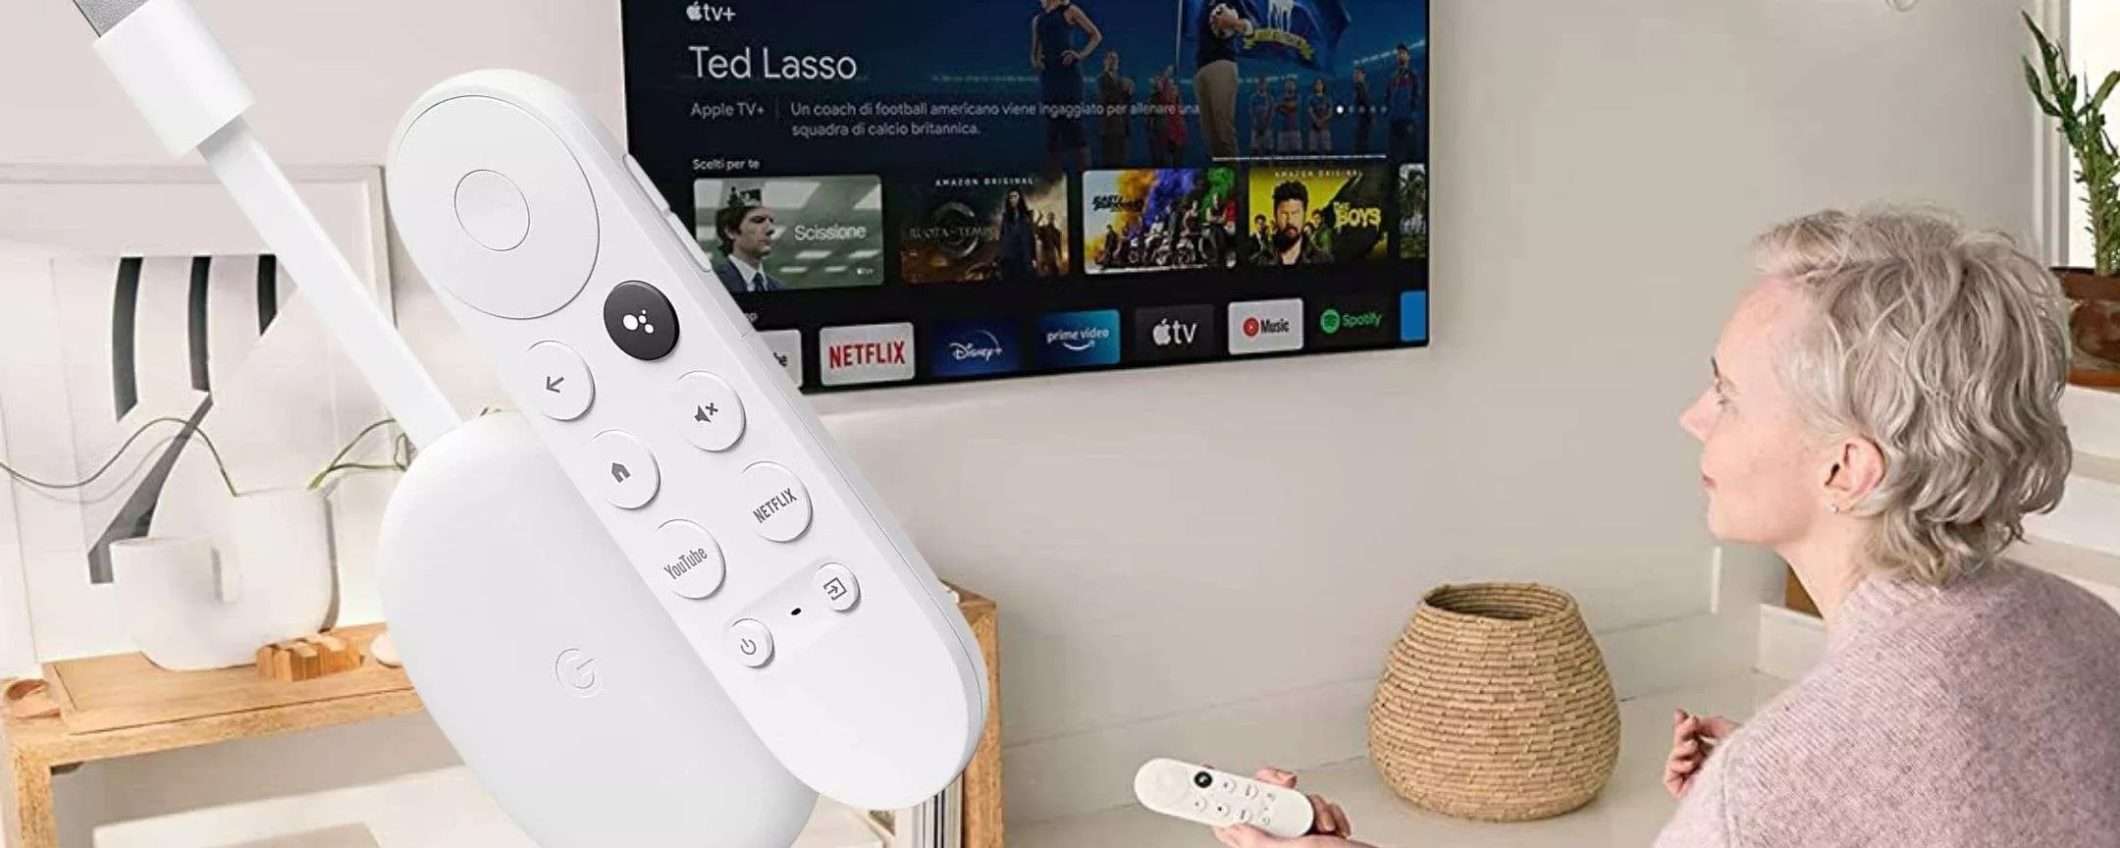 Google TV e qualunque app tu voglia sulla TV: ti serve Chromecast (29€)